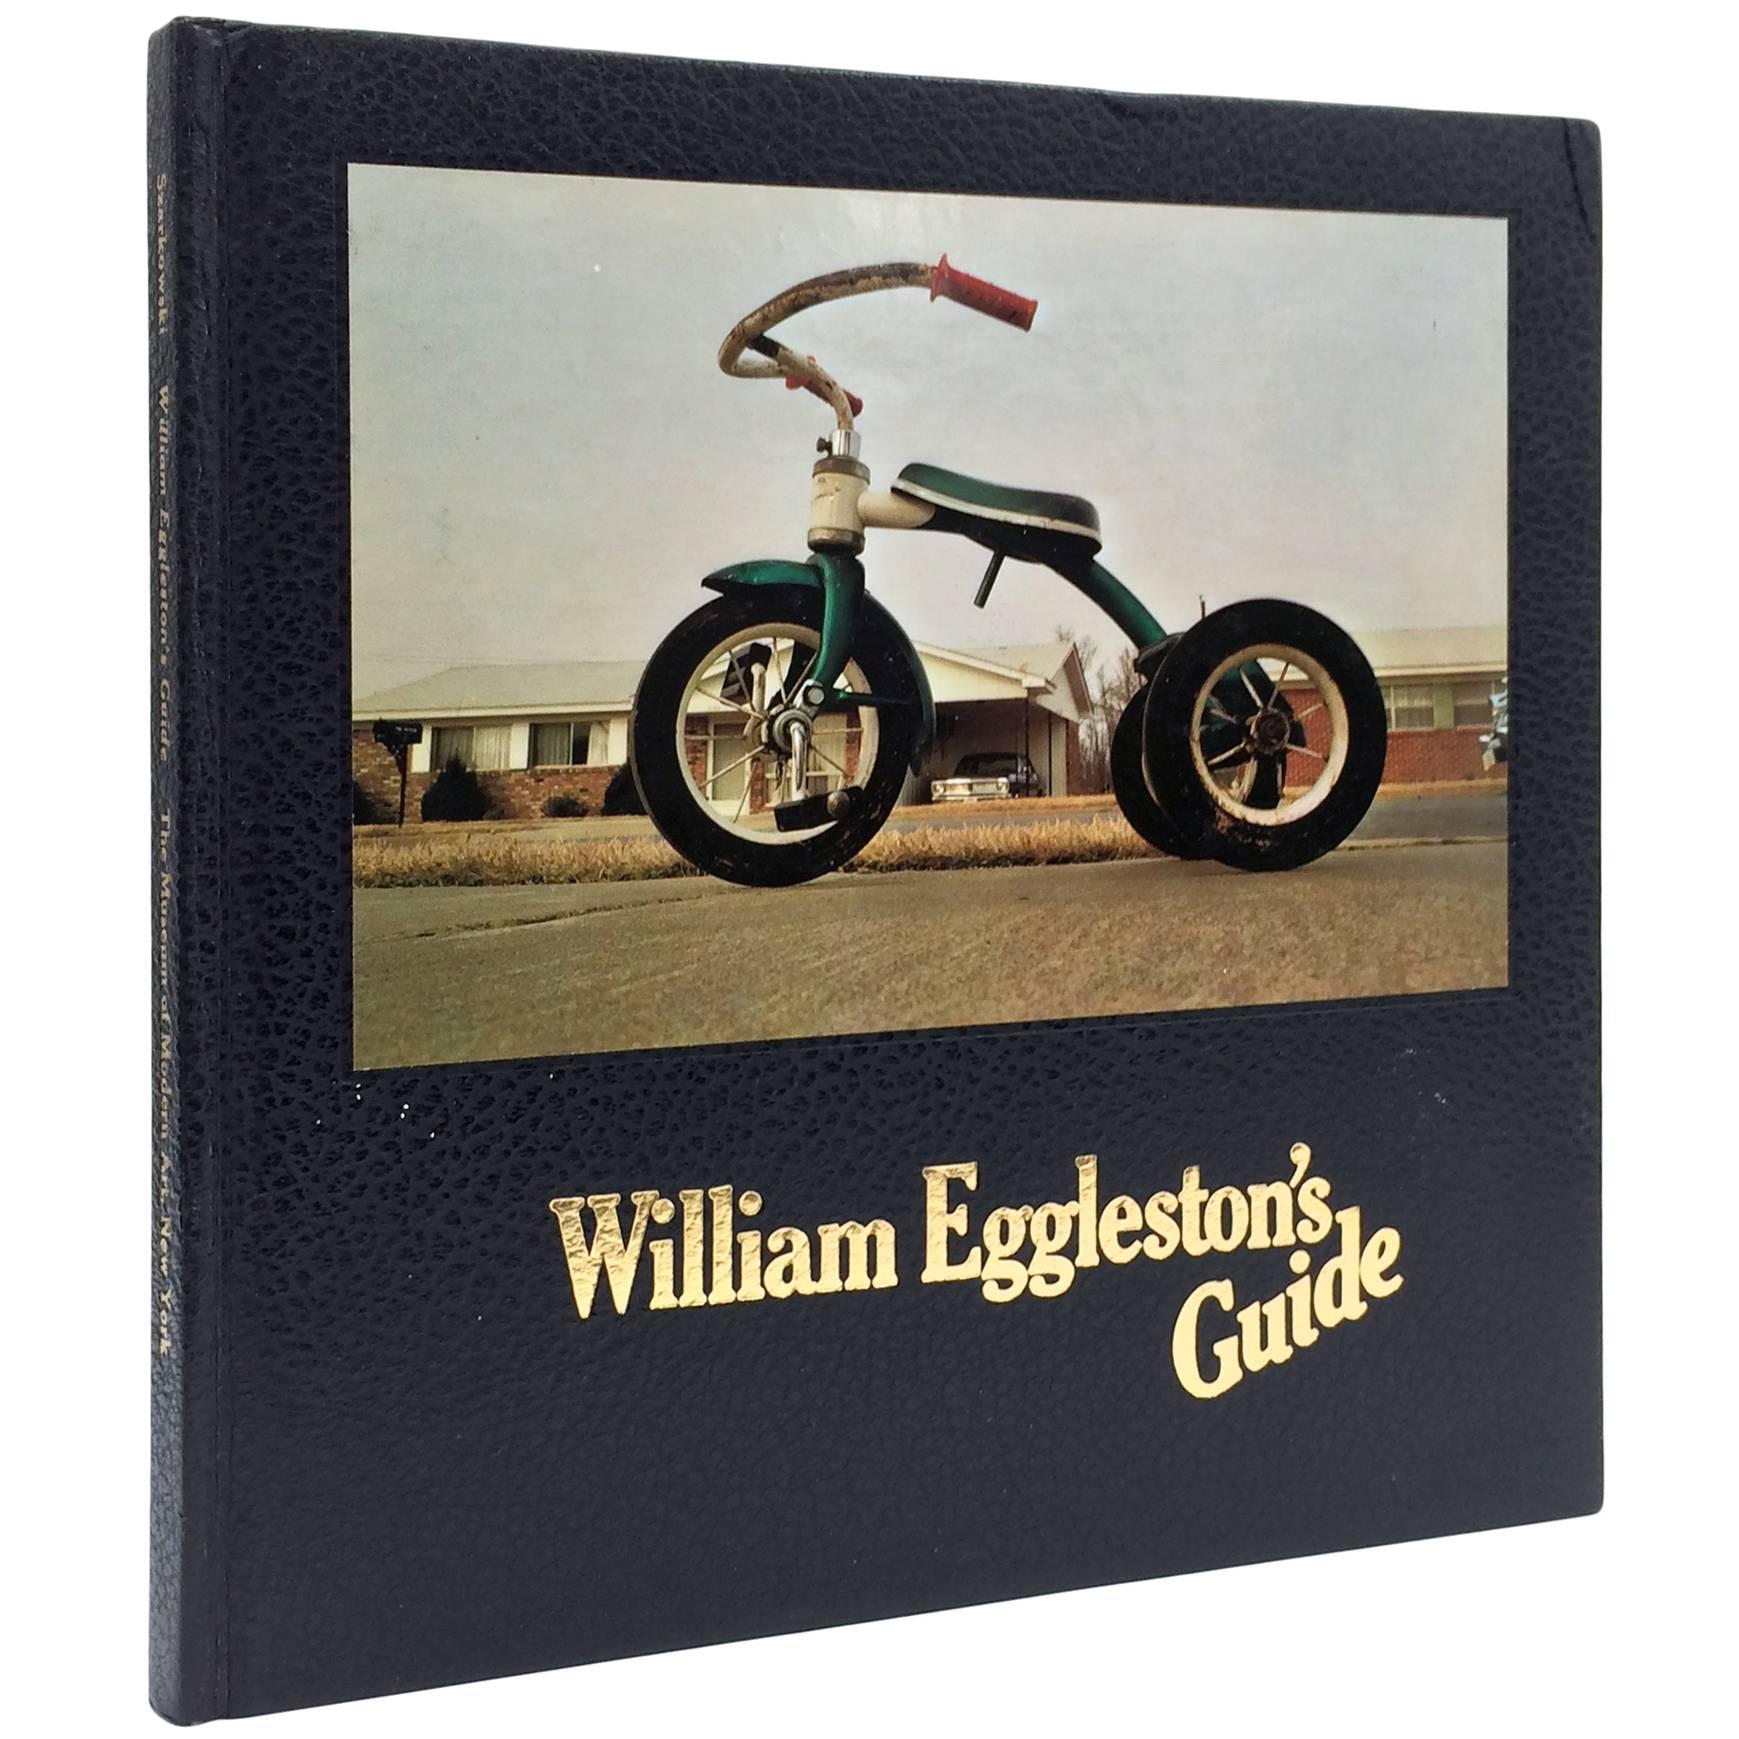 William Eggleston's Guide, 1st Edition For Sale